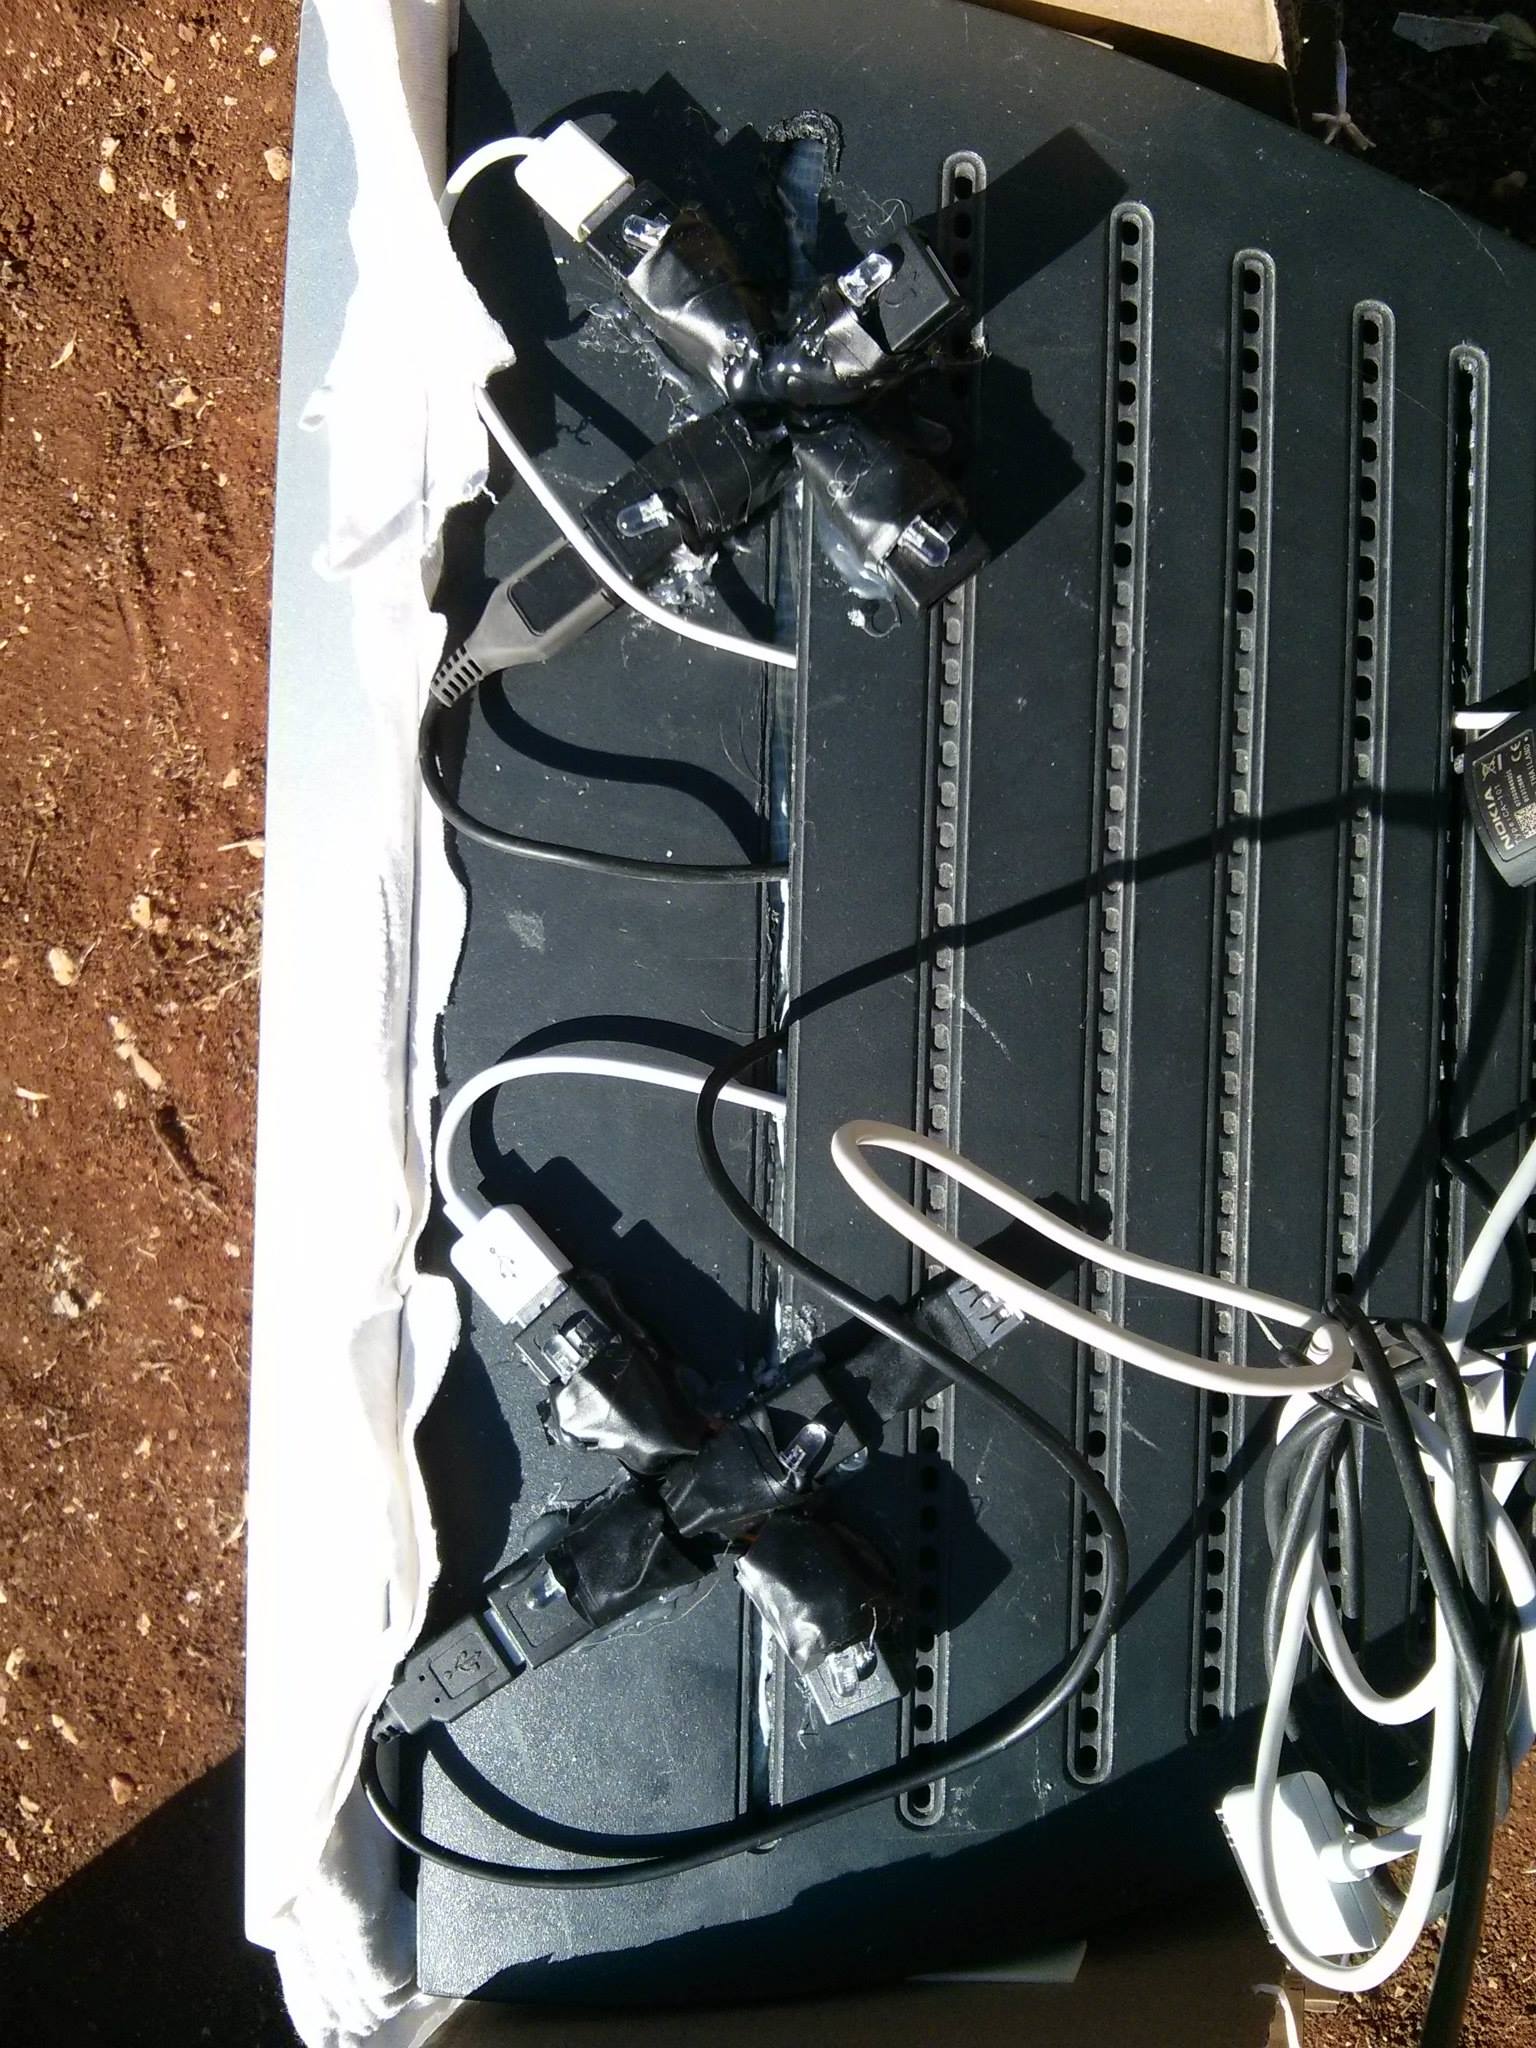 solar phone charging station - TV2